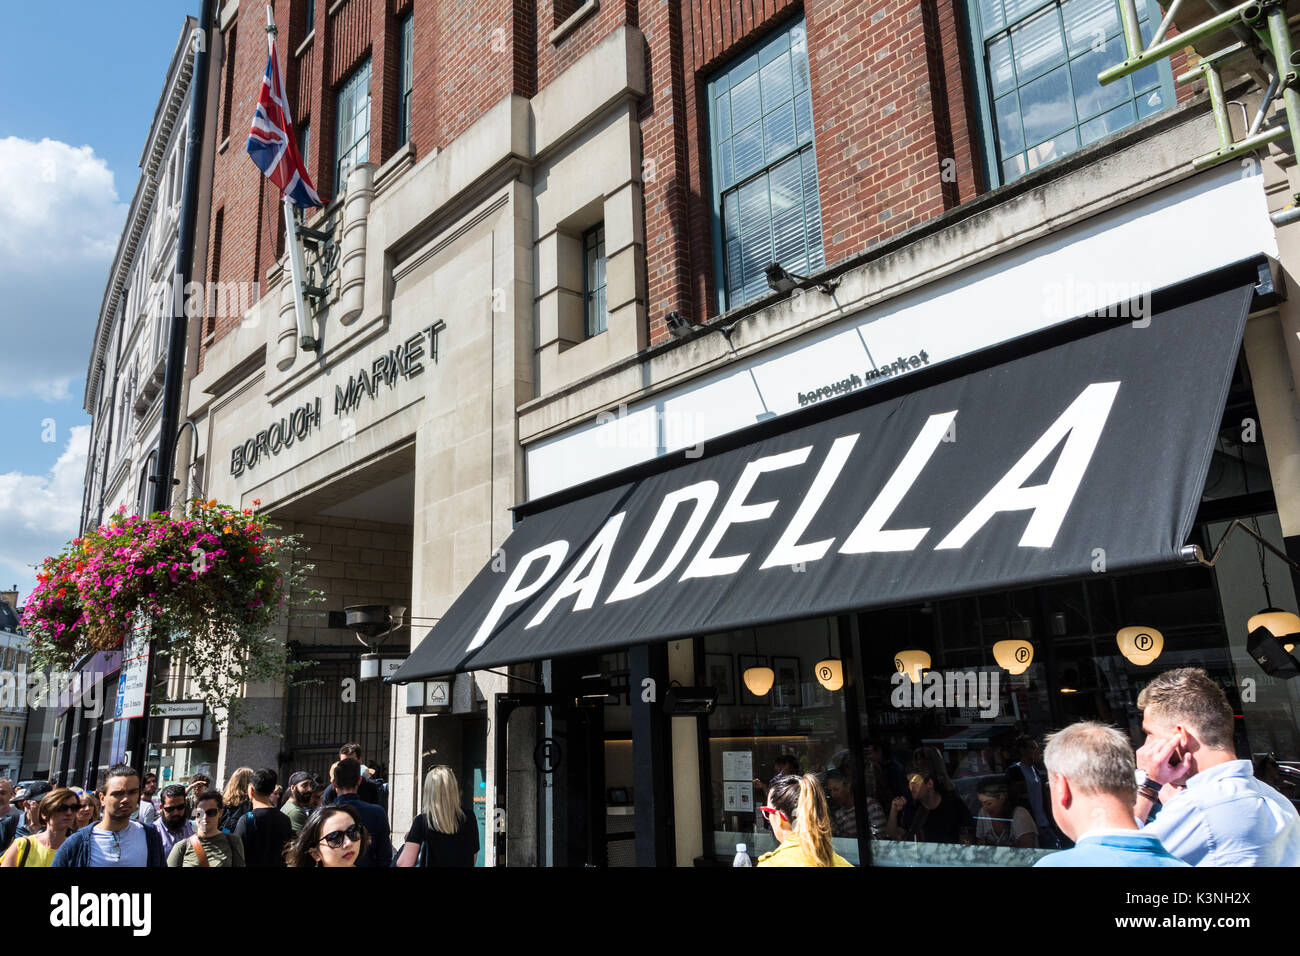 Padella a modern Italian bistro in Borough Market in Southwark St, London SE1, UK Stock Photo